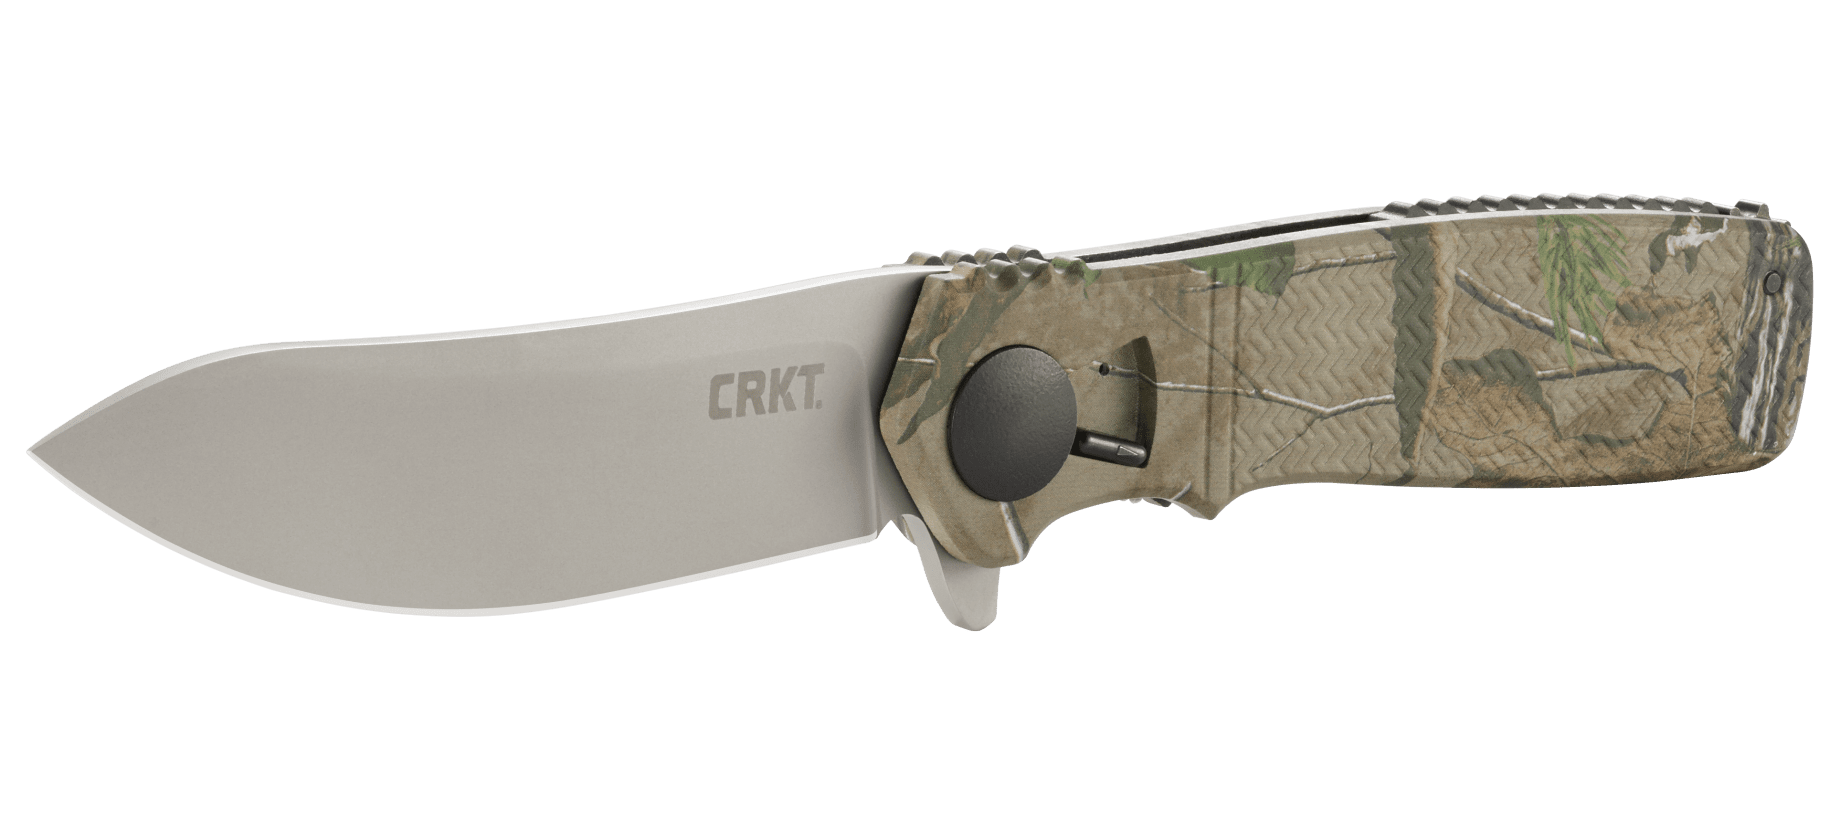 фото Складной нож crkt homefront™ hunter, сталь 1.4116, рукоять термопластик grn